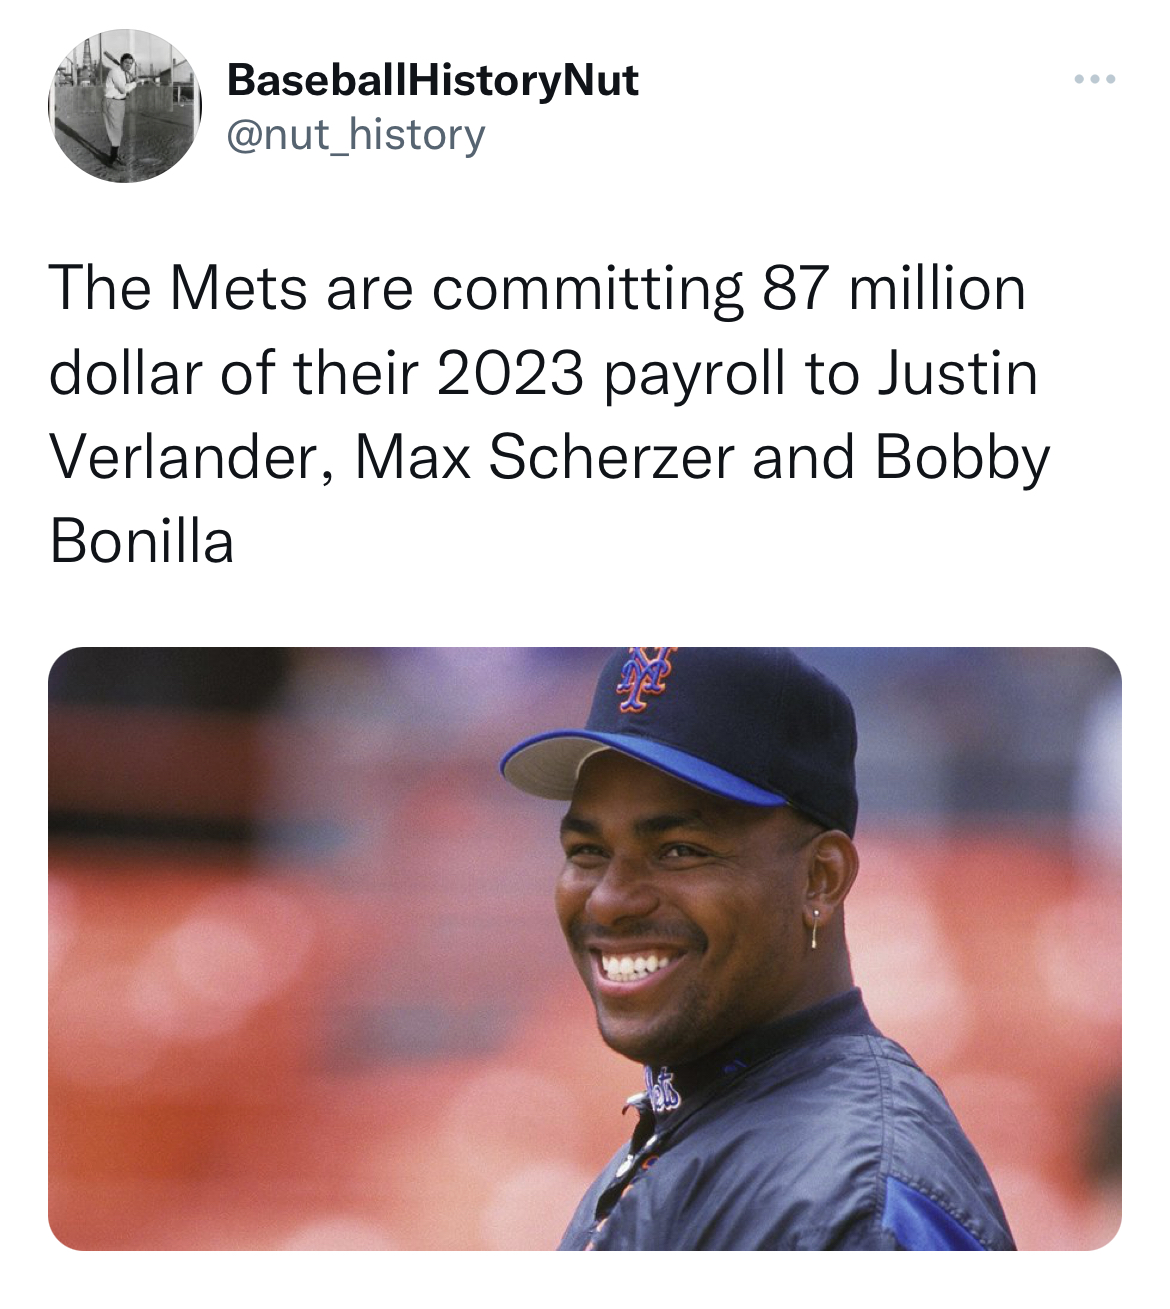 tweets roasting celebs - cap - Baseball HistoryNut The Mets are committing 87 million dollar of their 2023 payroll to Justin Verlander, Max Scherzer and Bobby Bonilla